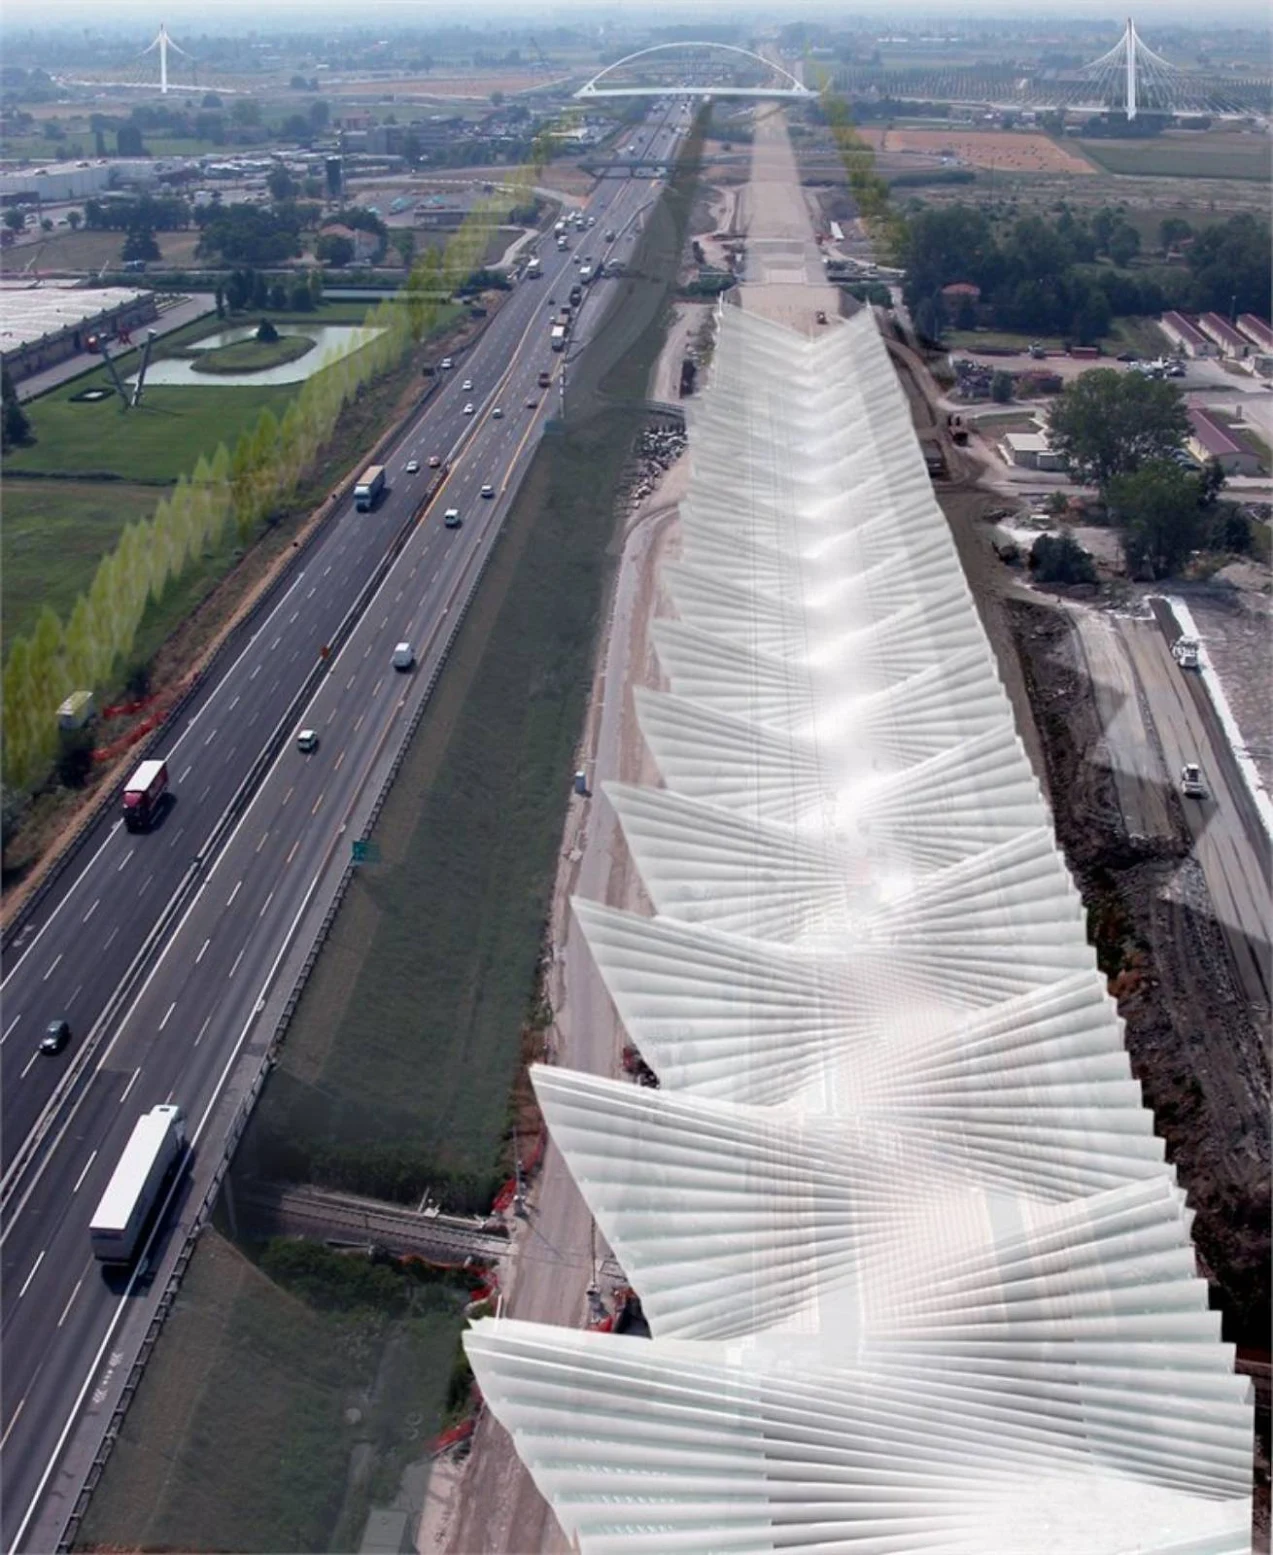 Mediopadana Station by Santiago Calatrava